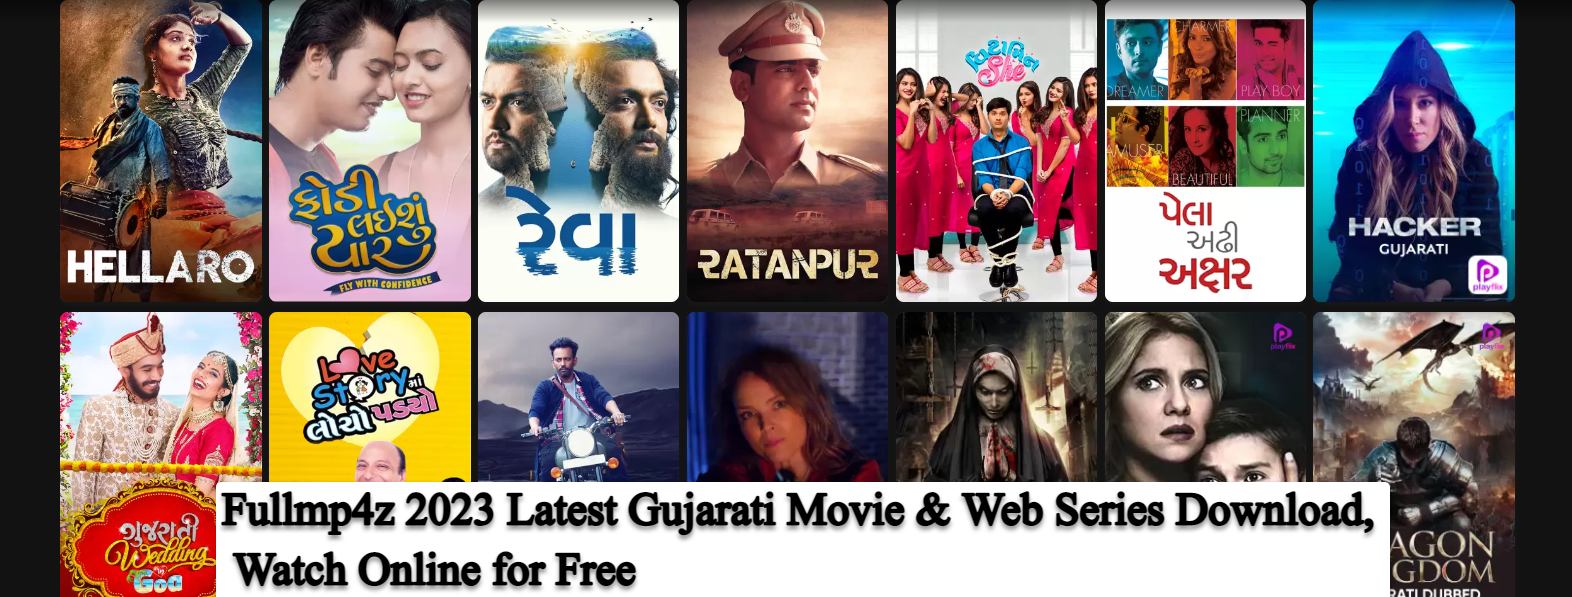 Fullmp4z 2023 Latest Gujarati Movie & Web Series Download, Watch Online for Free